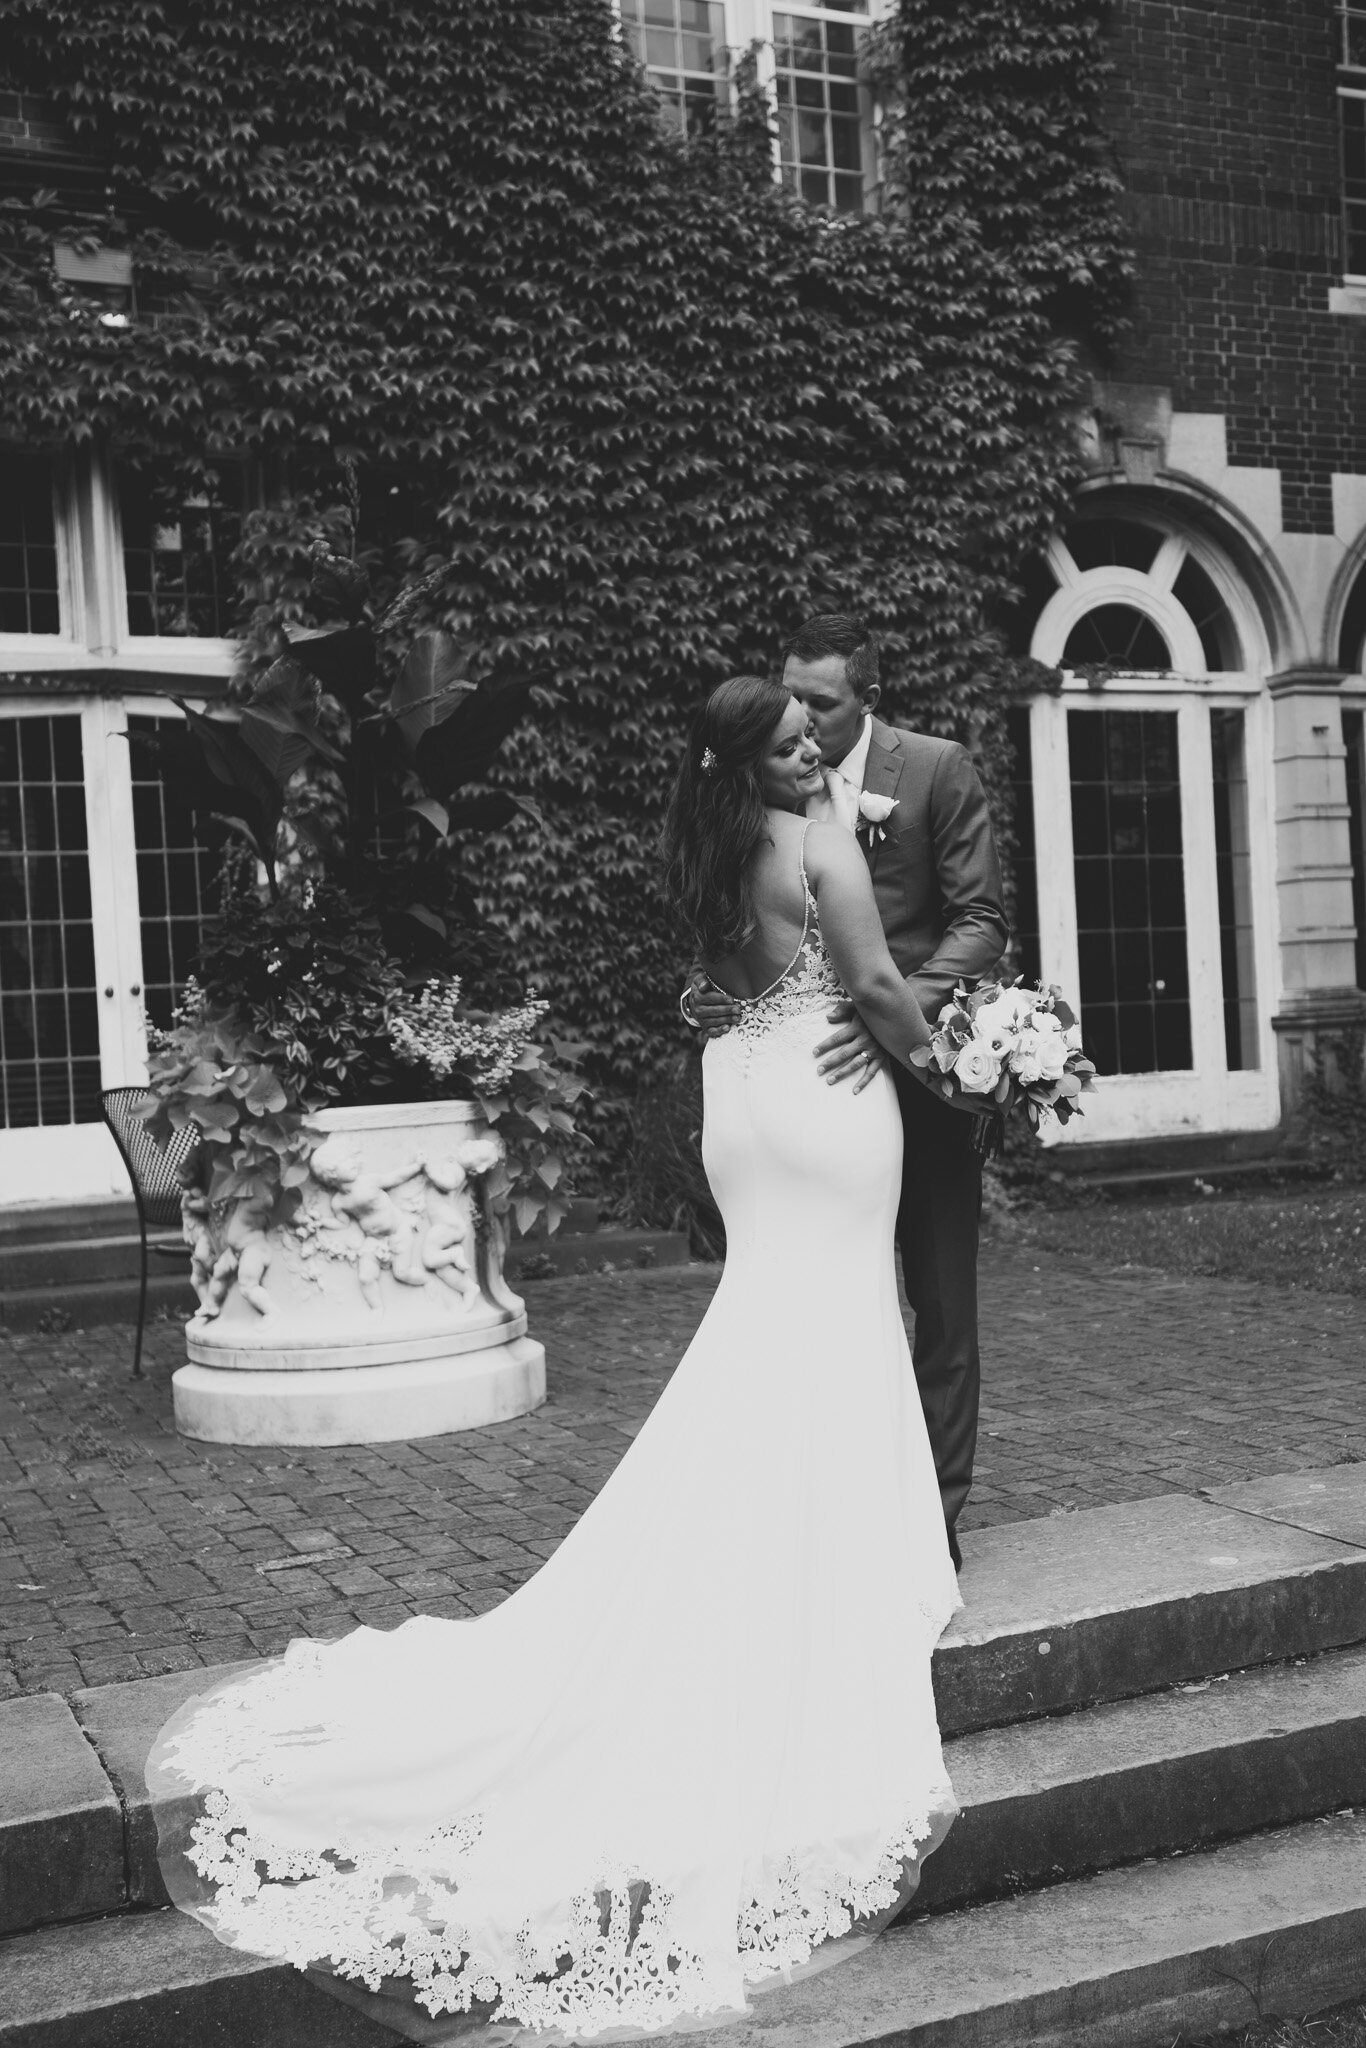 GRAM Wedding - Grand Rapids Art Musuem - Grand Rapids Wedding Photographer - Devos Place Wedding - Aquinas Wedding - Aquinas College Wedding - J Darling Photo - Jessica Darling056.jpg